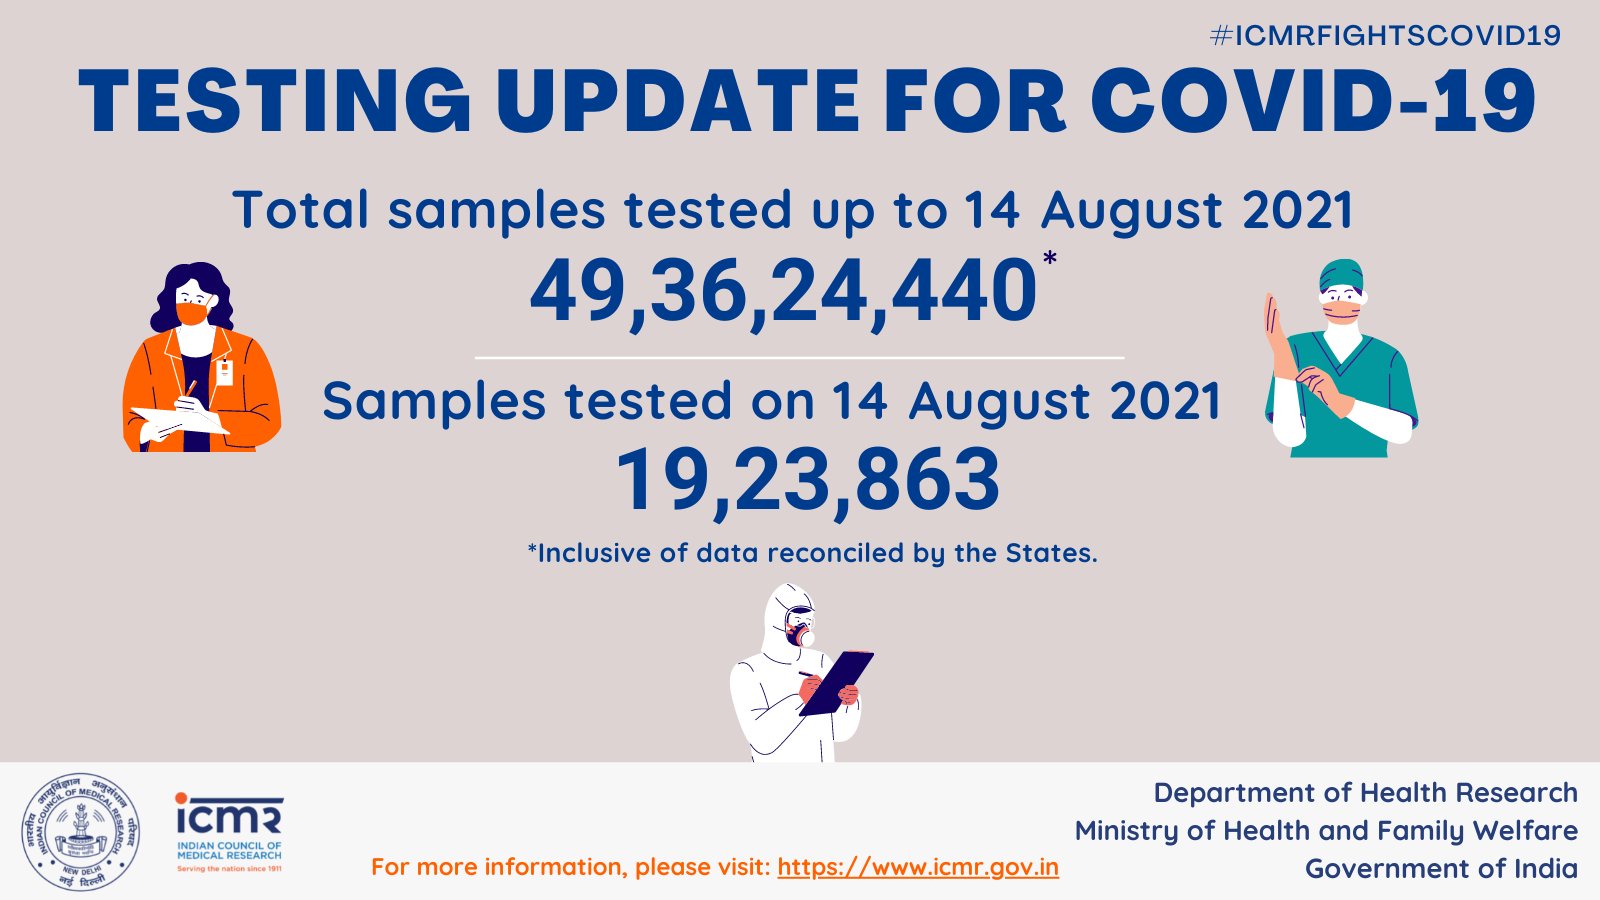 India Coronavirus Updates: Corona crisis continues to wreak havoc, 36 thousand new cases in 24 hours, 493 deaths